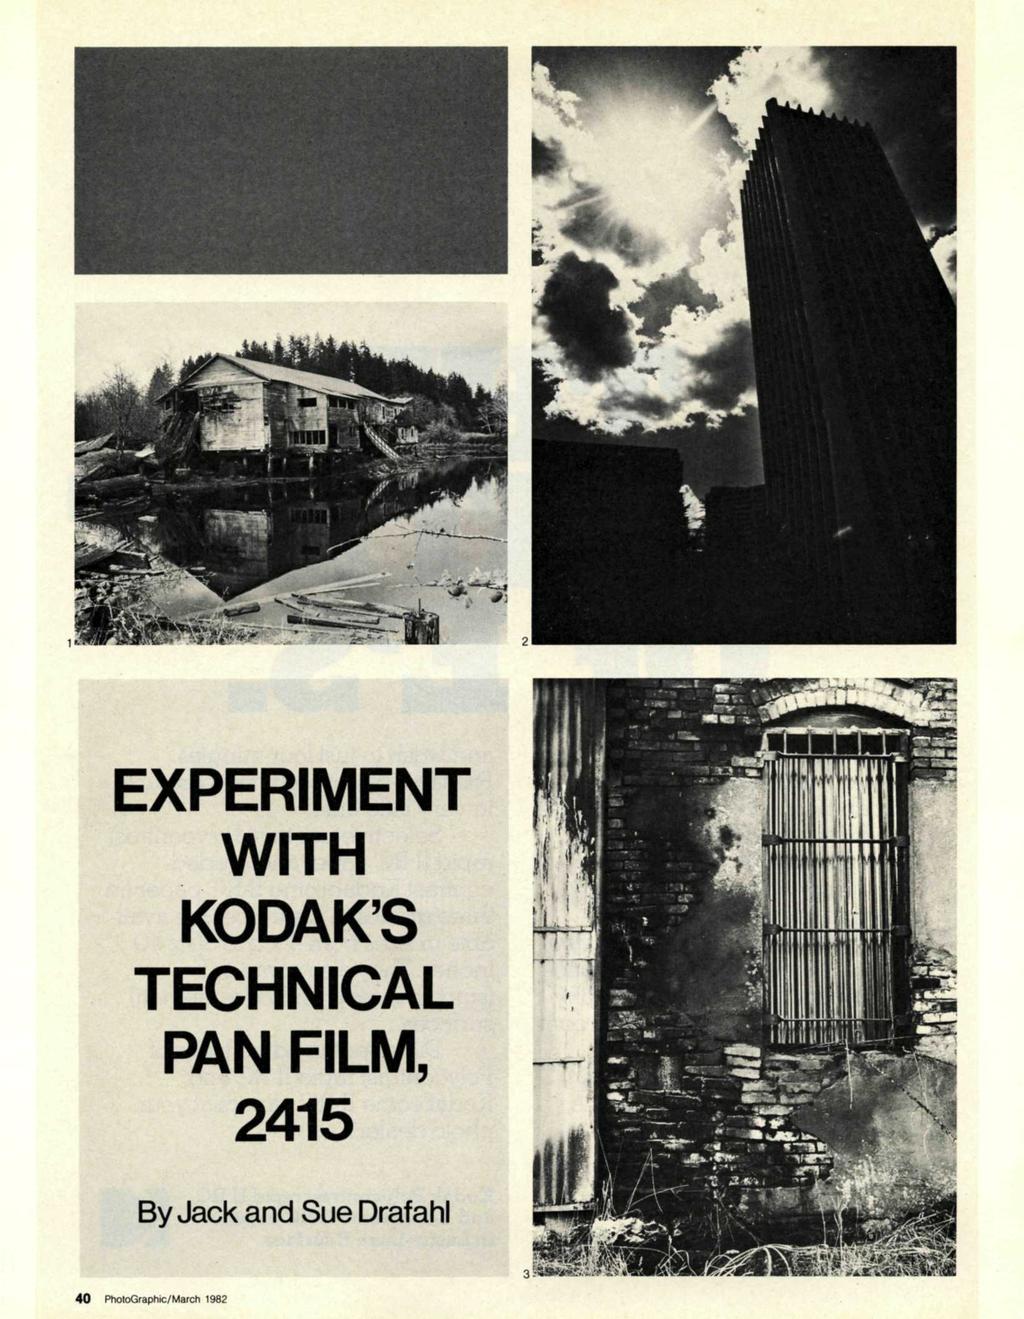 EXPERIMENT WITH KODAK'S TECHNICAL PAN FILM, 2415